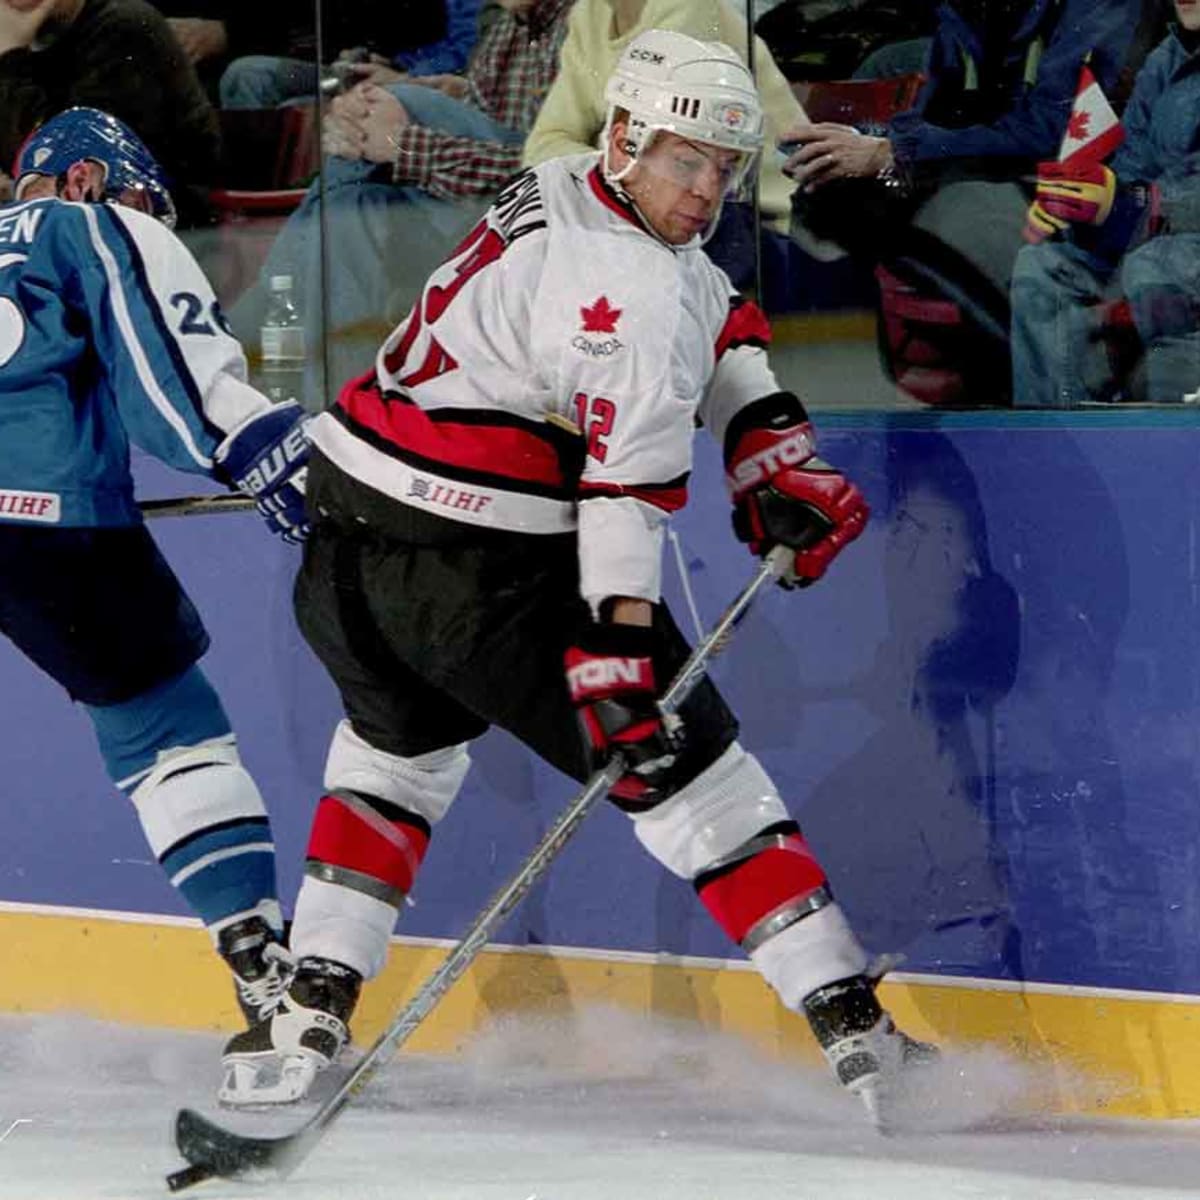 Autographed 2002 Canada Olympic Hockey Team Jersey. Jarome Iginla